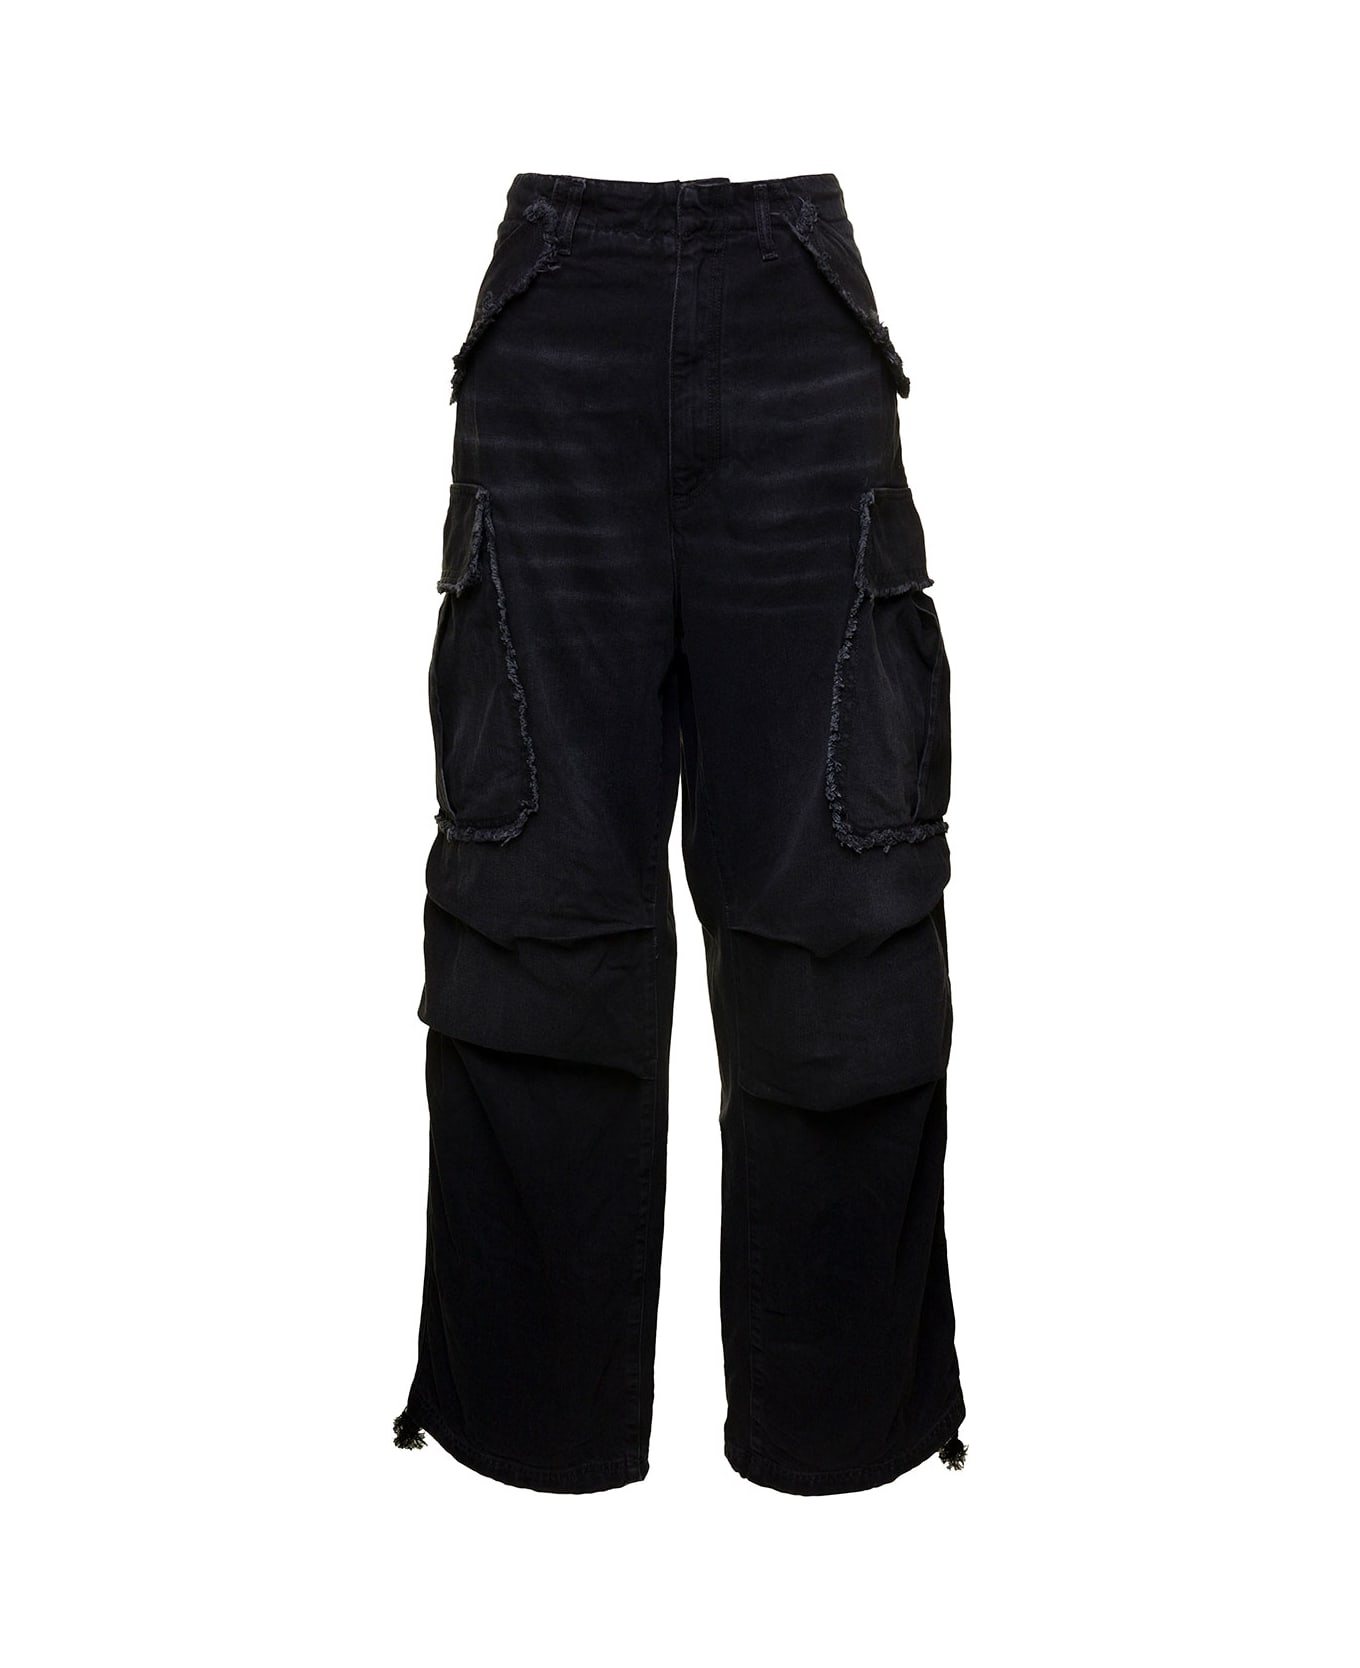 DARKPARK 'vivi' Black Oversized Cargo Jeans With Patch Pockets In Cotton Denim Woman - Black